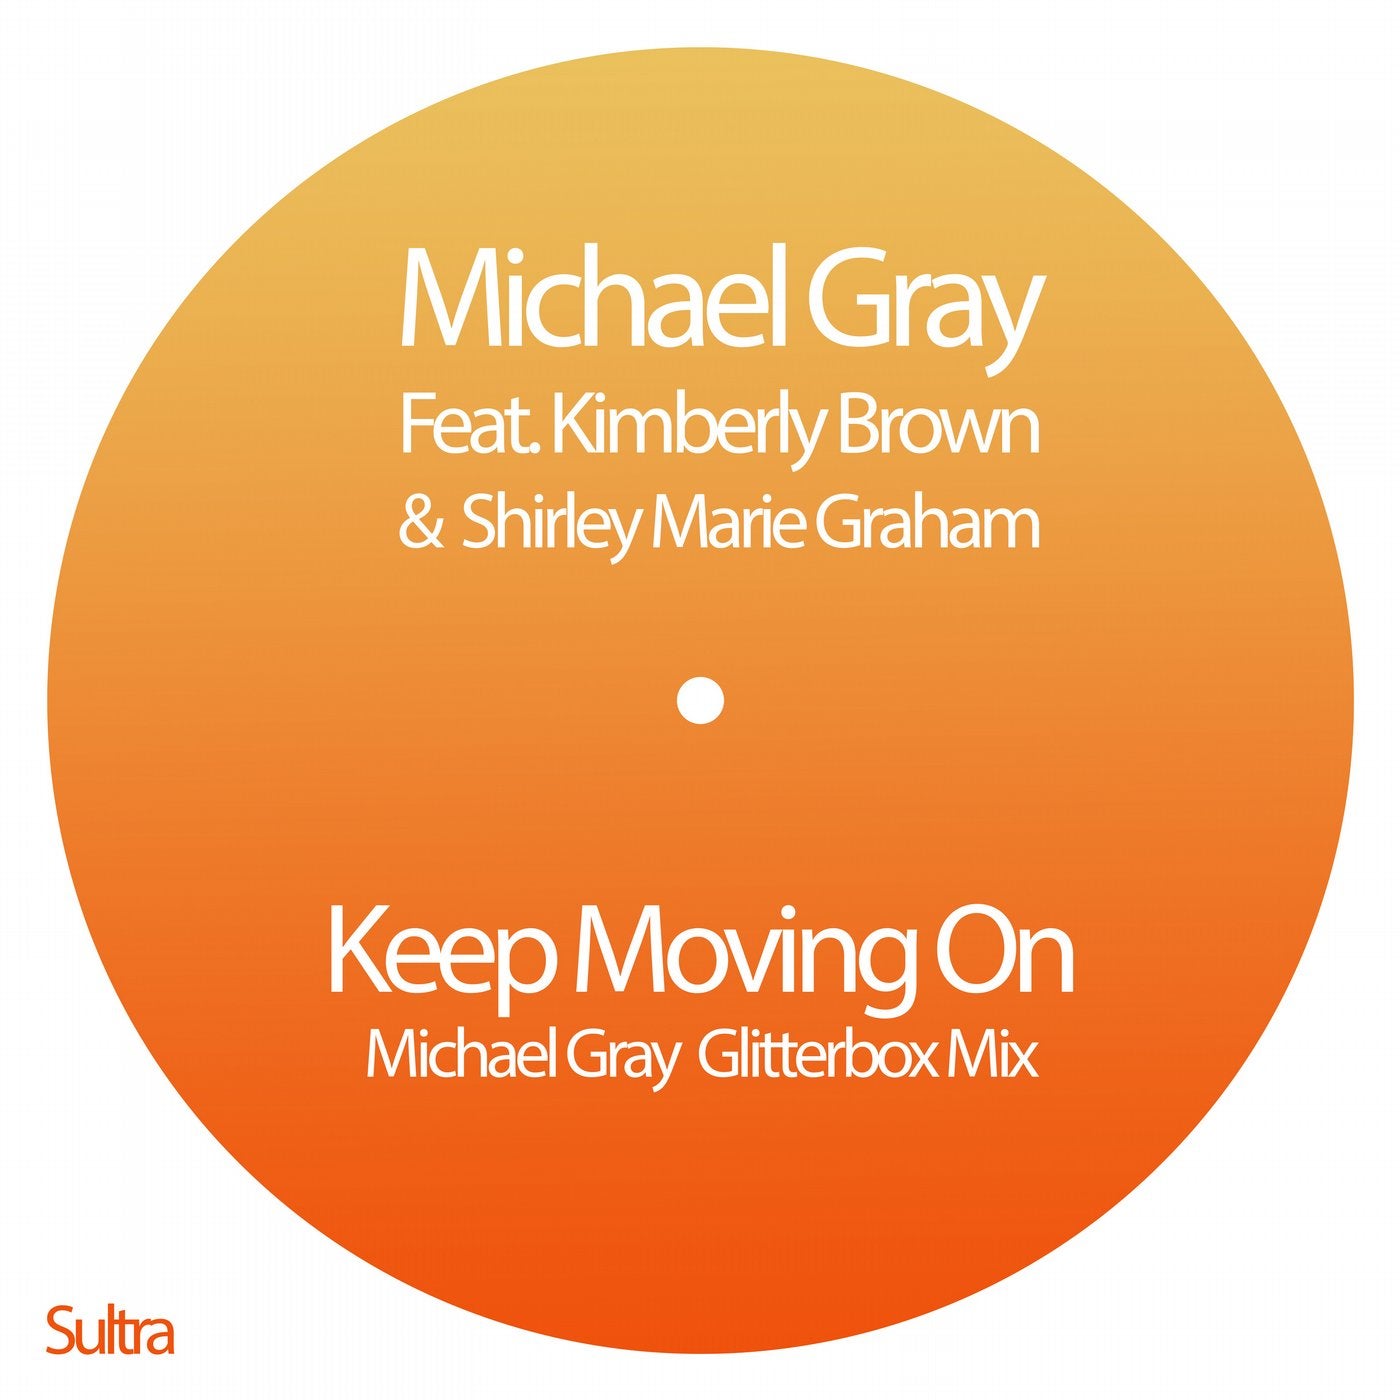 Keep Moving On - Michael Gray Glitterbox Mix